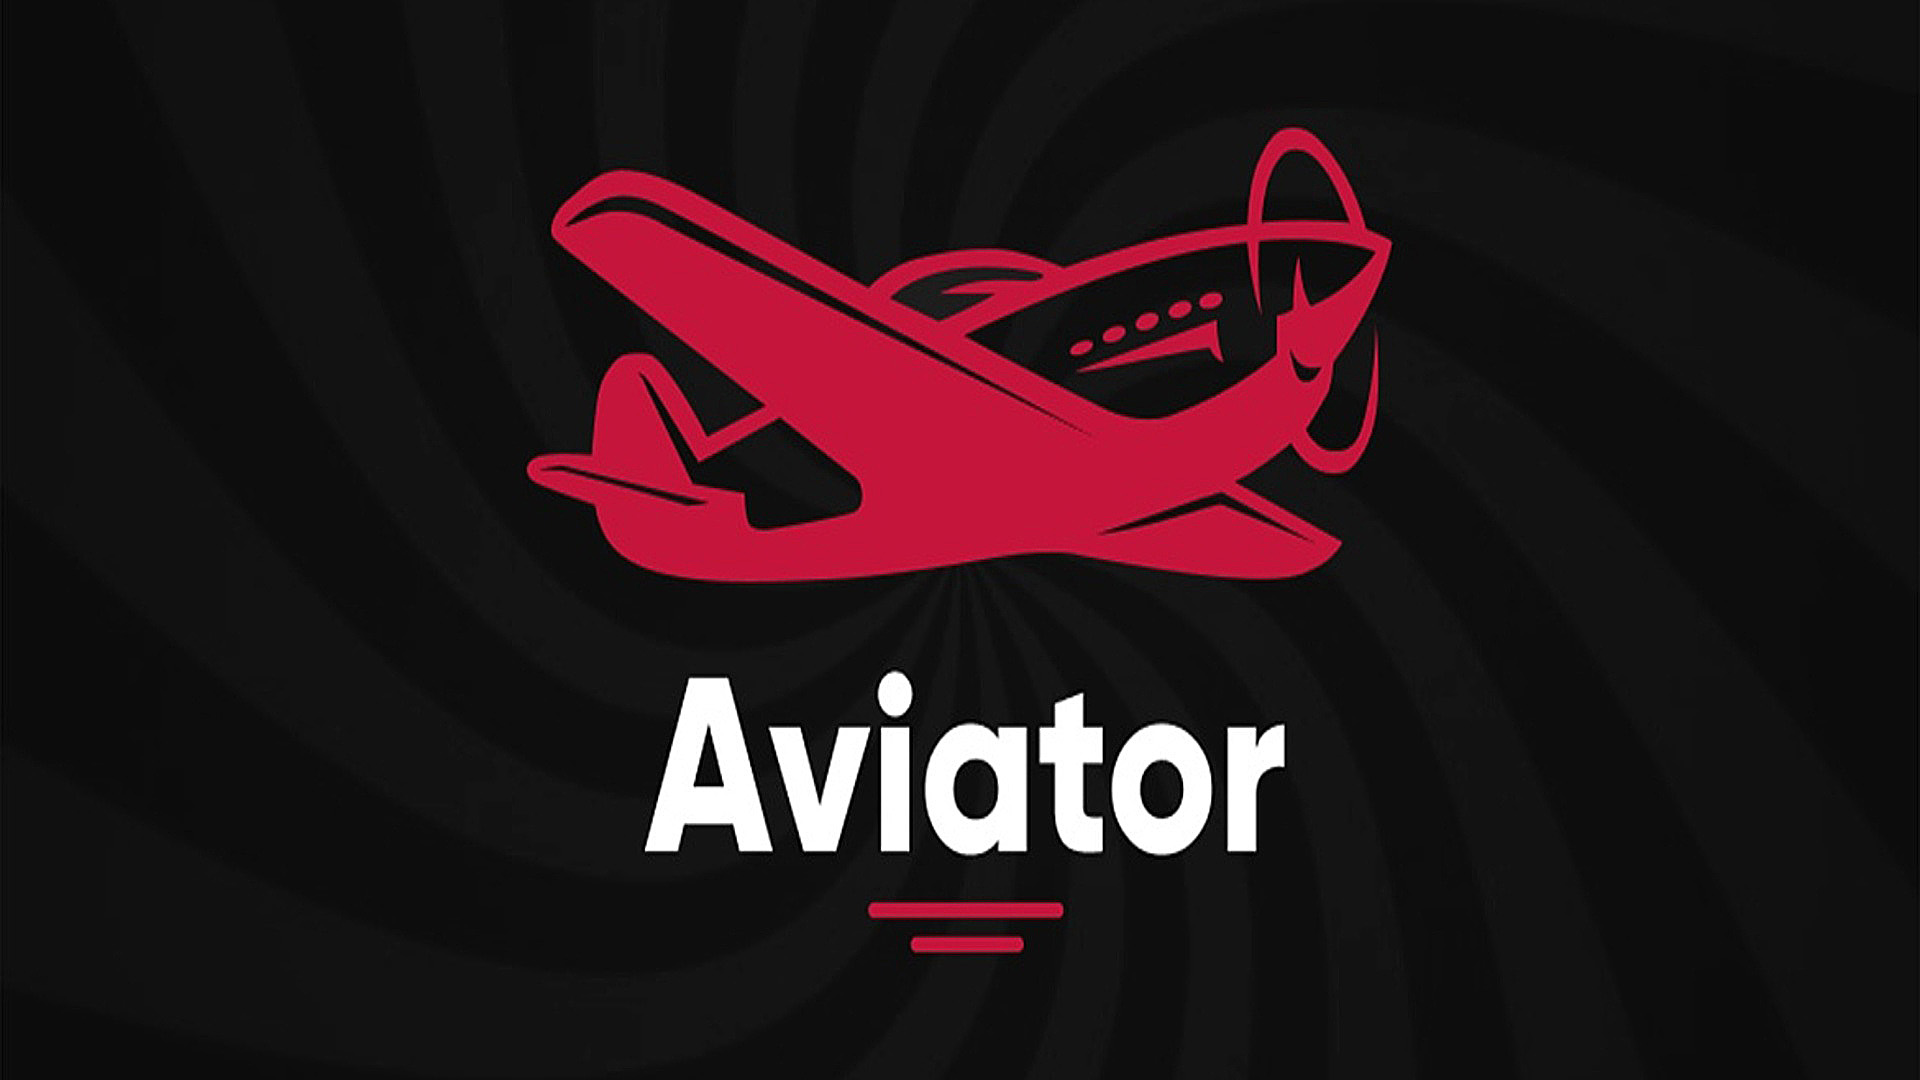 Aviator игра aviator game play aviator org. Aviator spribe. Авиатор игра в казино. Авиатор казино логотип.